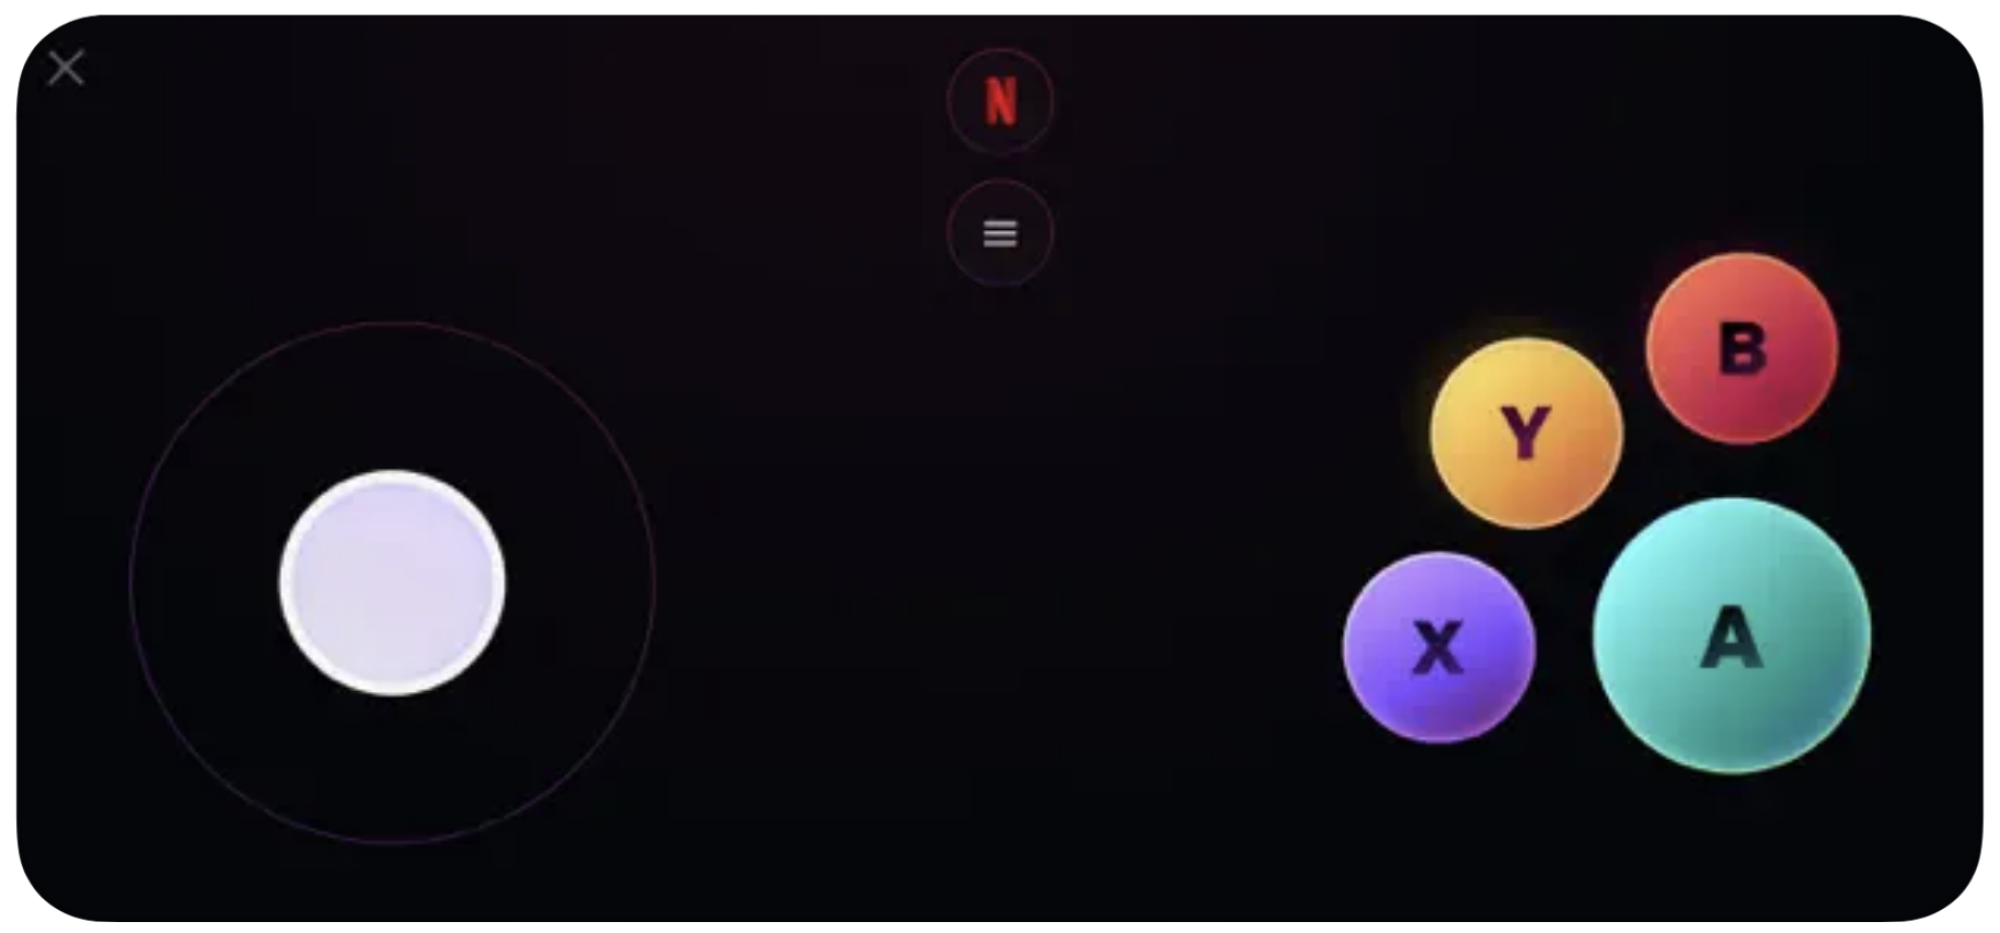 A screenshot of the Netflix Game Controller layout.